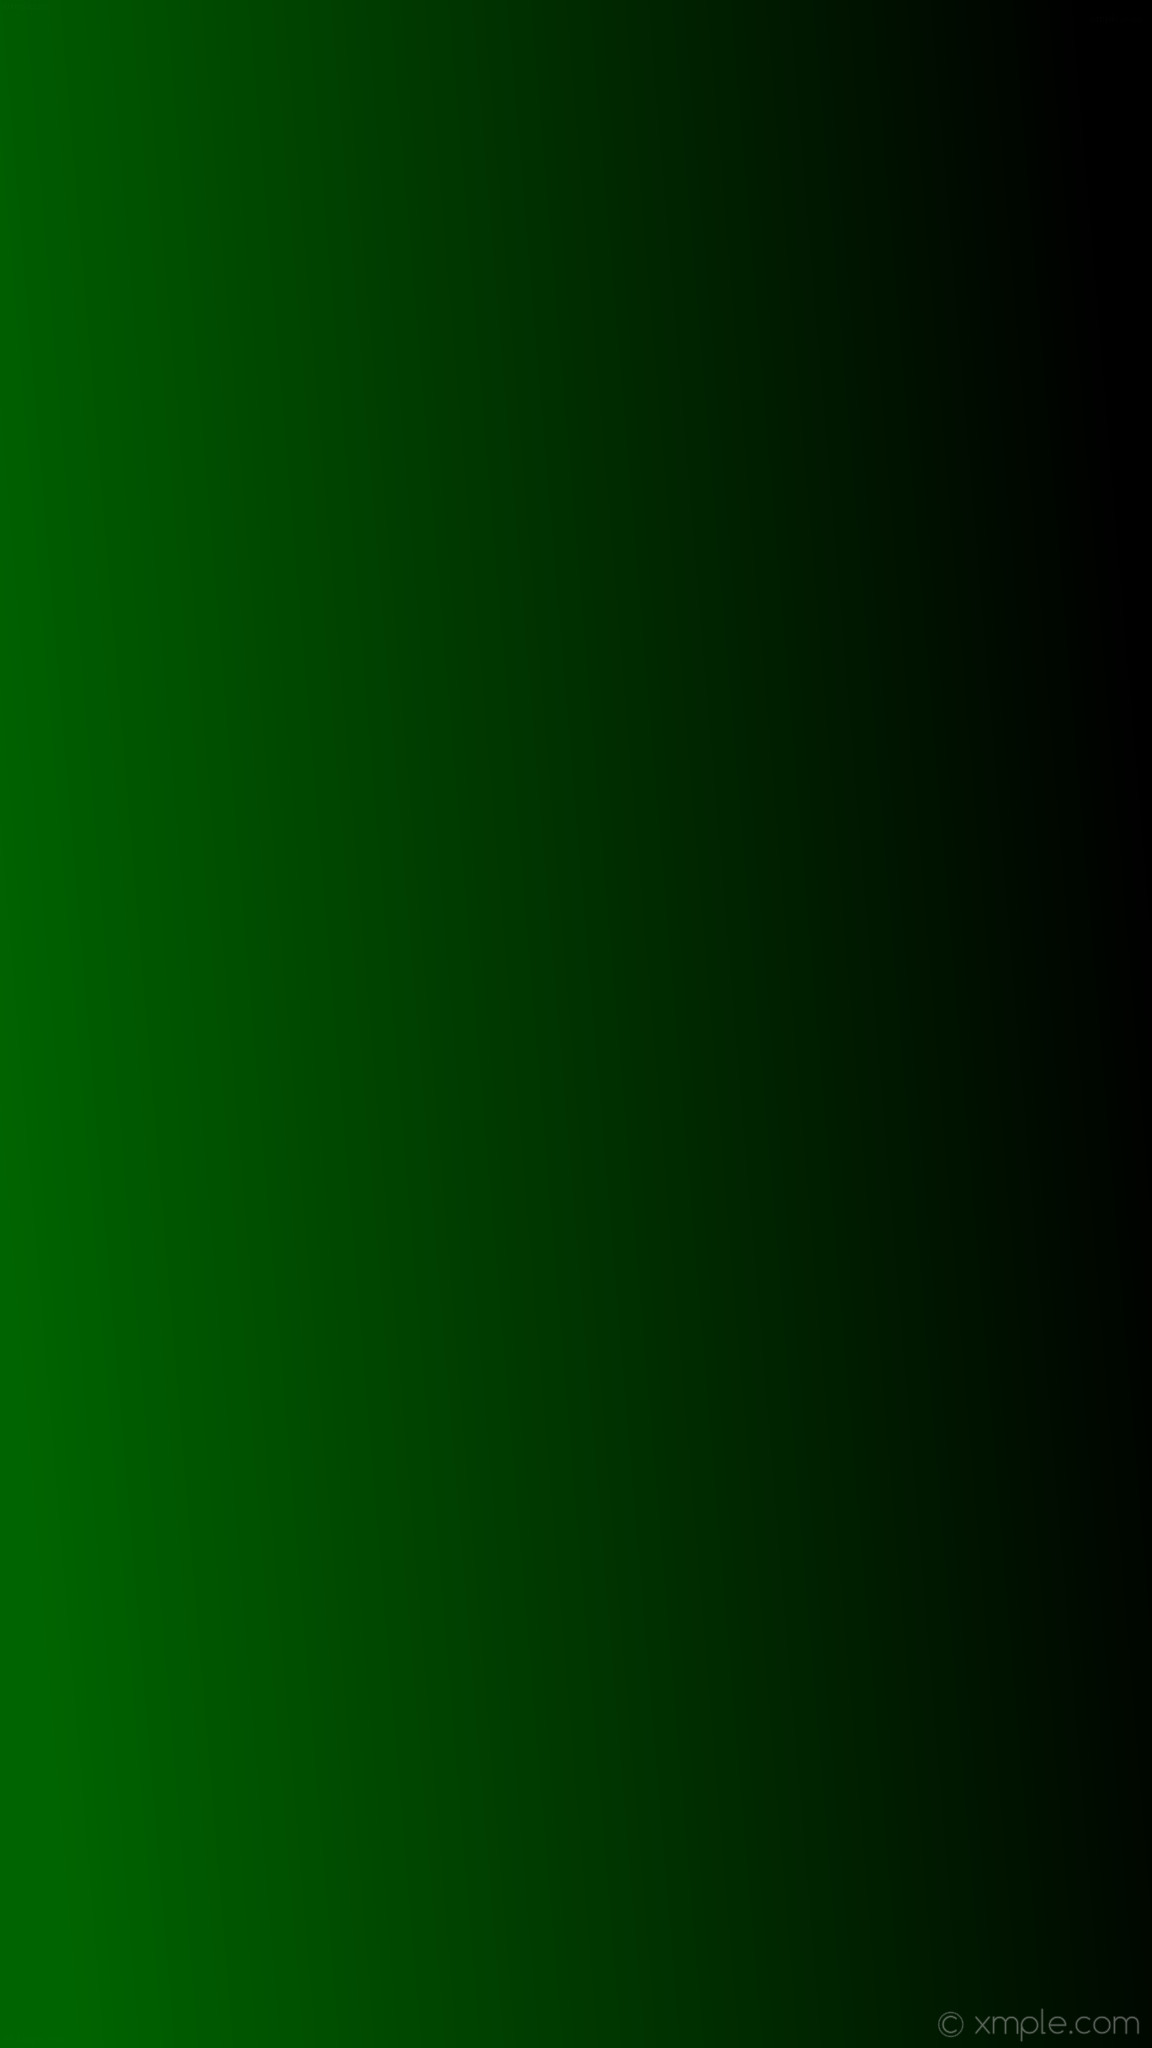 1152x2048 wallpaper gradient green black linear dark green #000000 #006400 15Â°